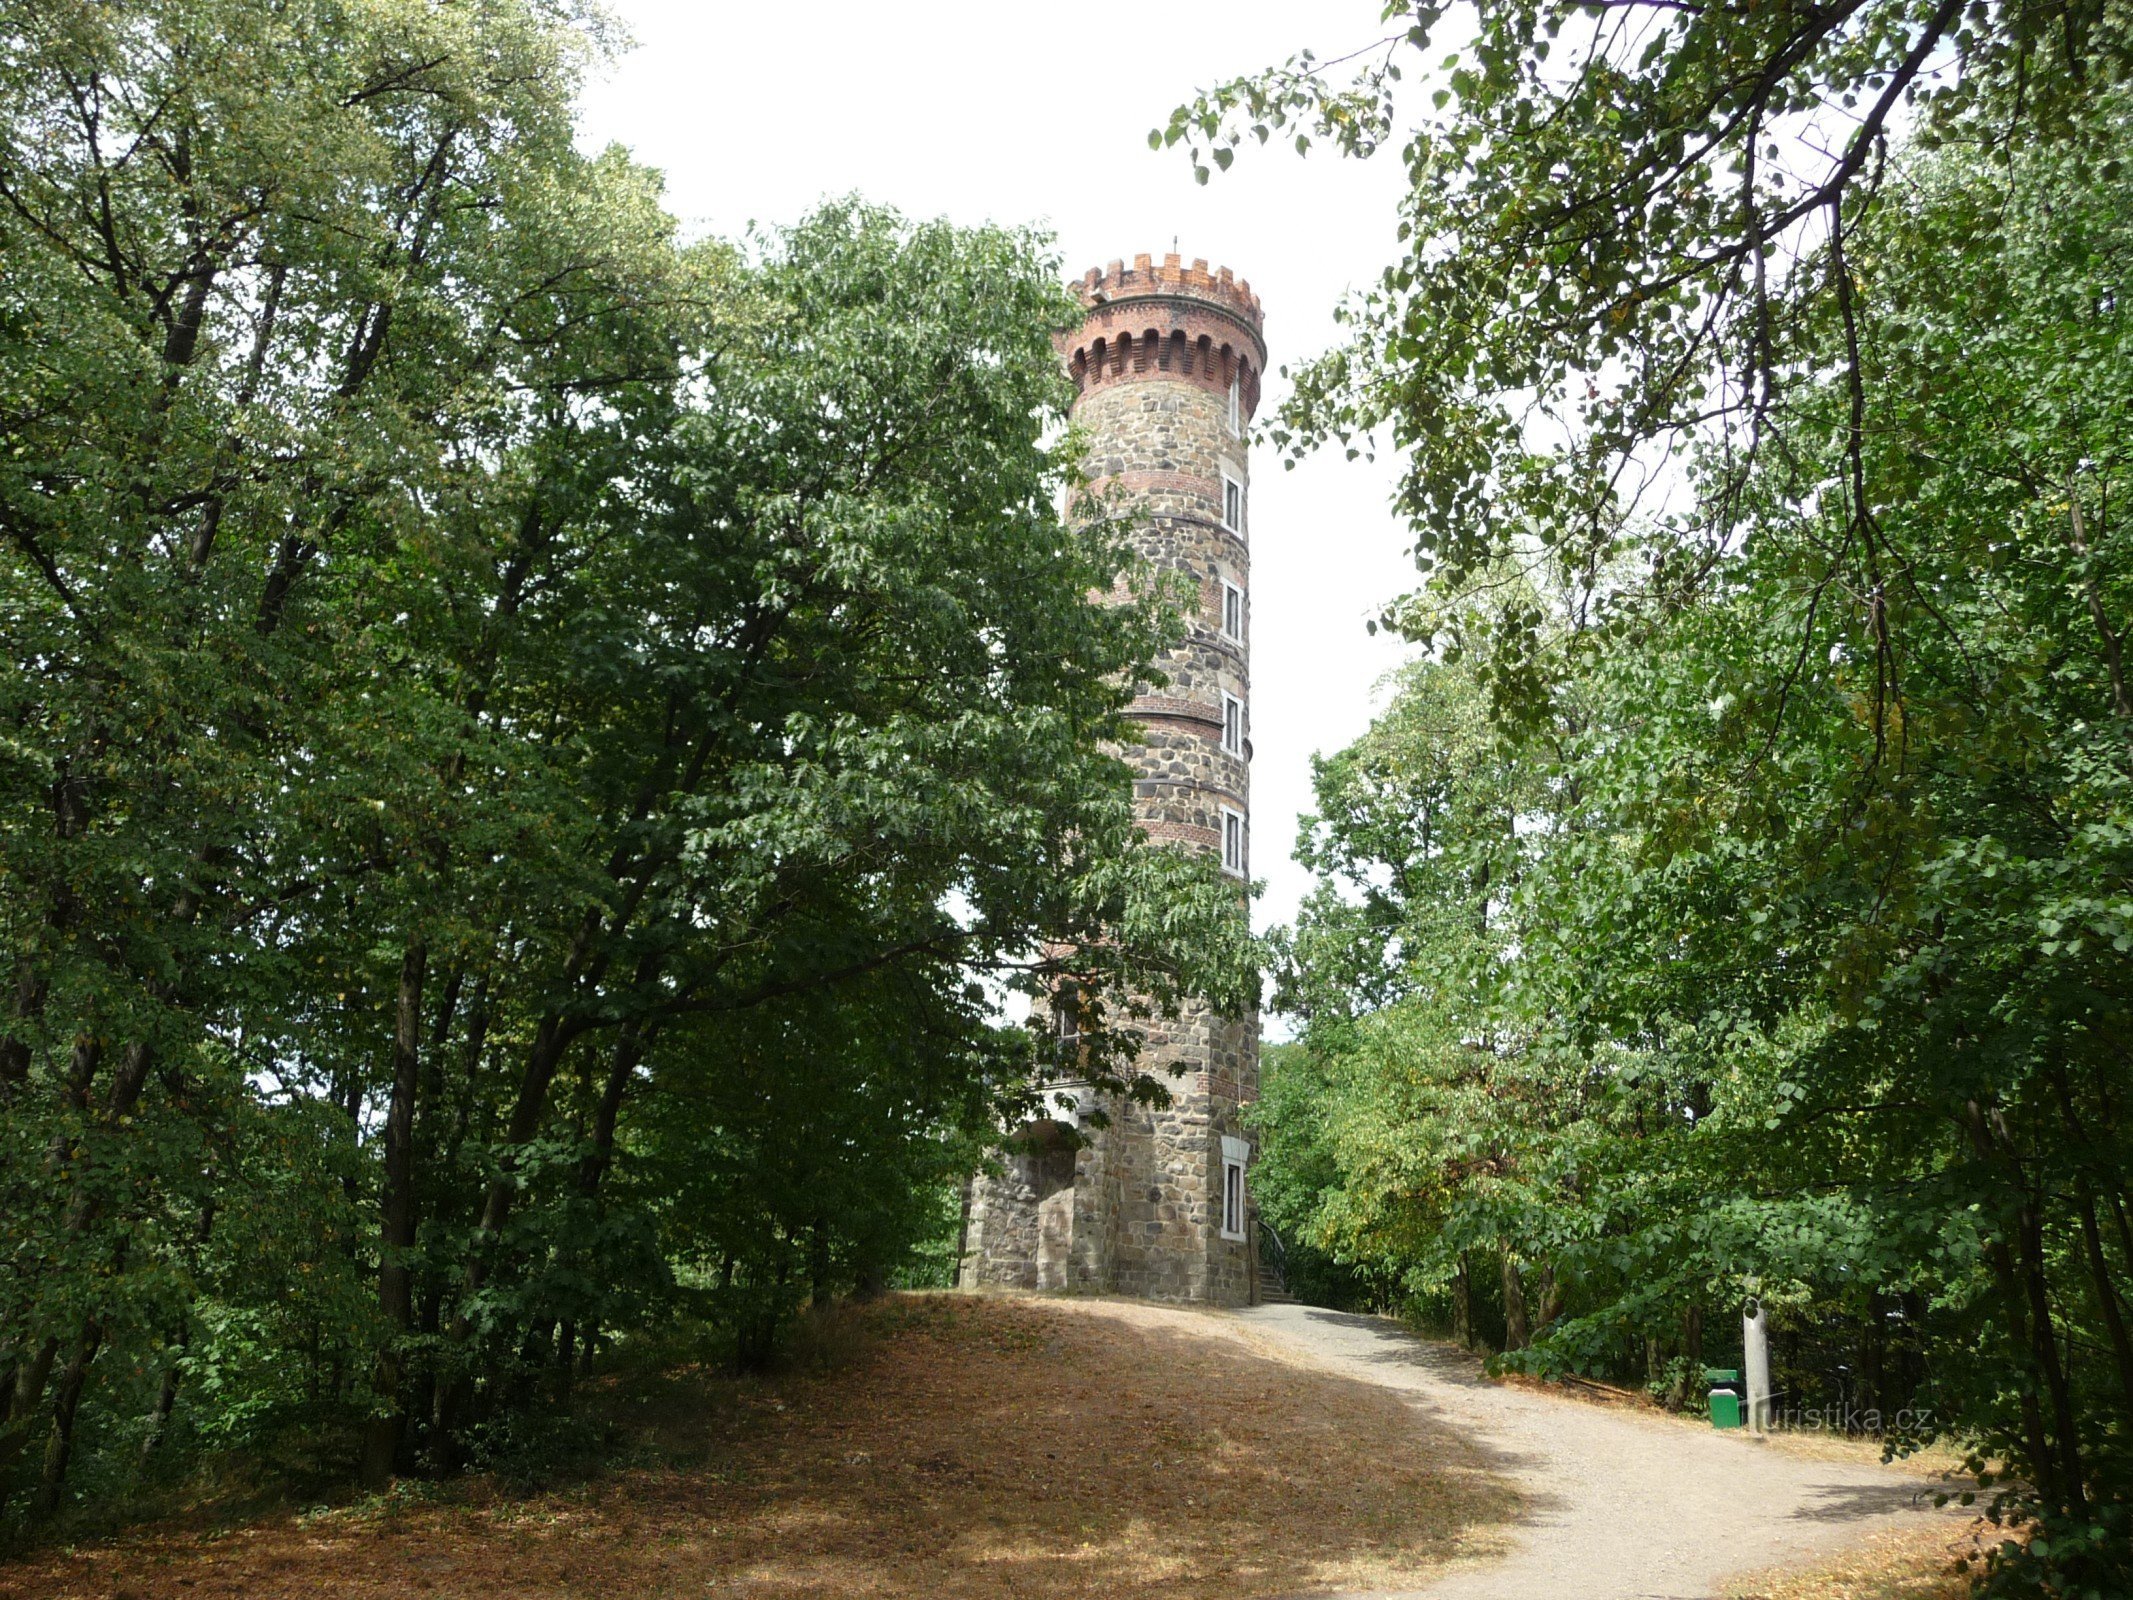 Cvilín - πύργος επιφυλακής με λεπτομέρειες από έξω, μέσα και θέα